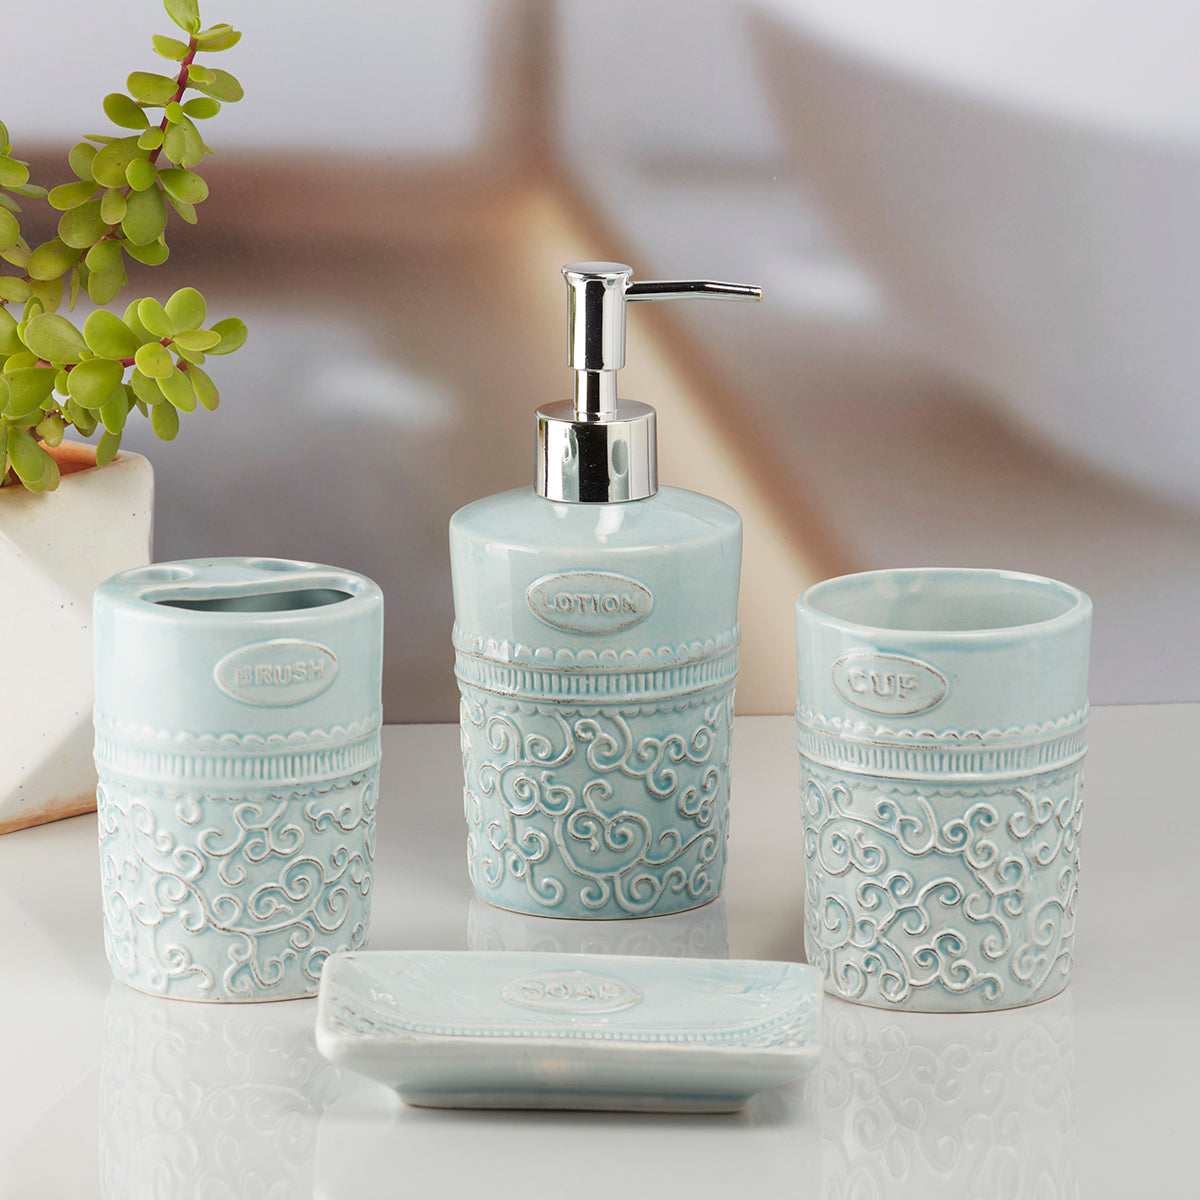 Ceramic Bathroom Accessories Set of 4 Bath Set with Soap Dispenser (10181)